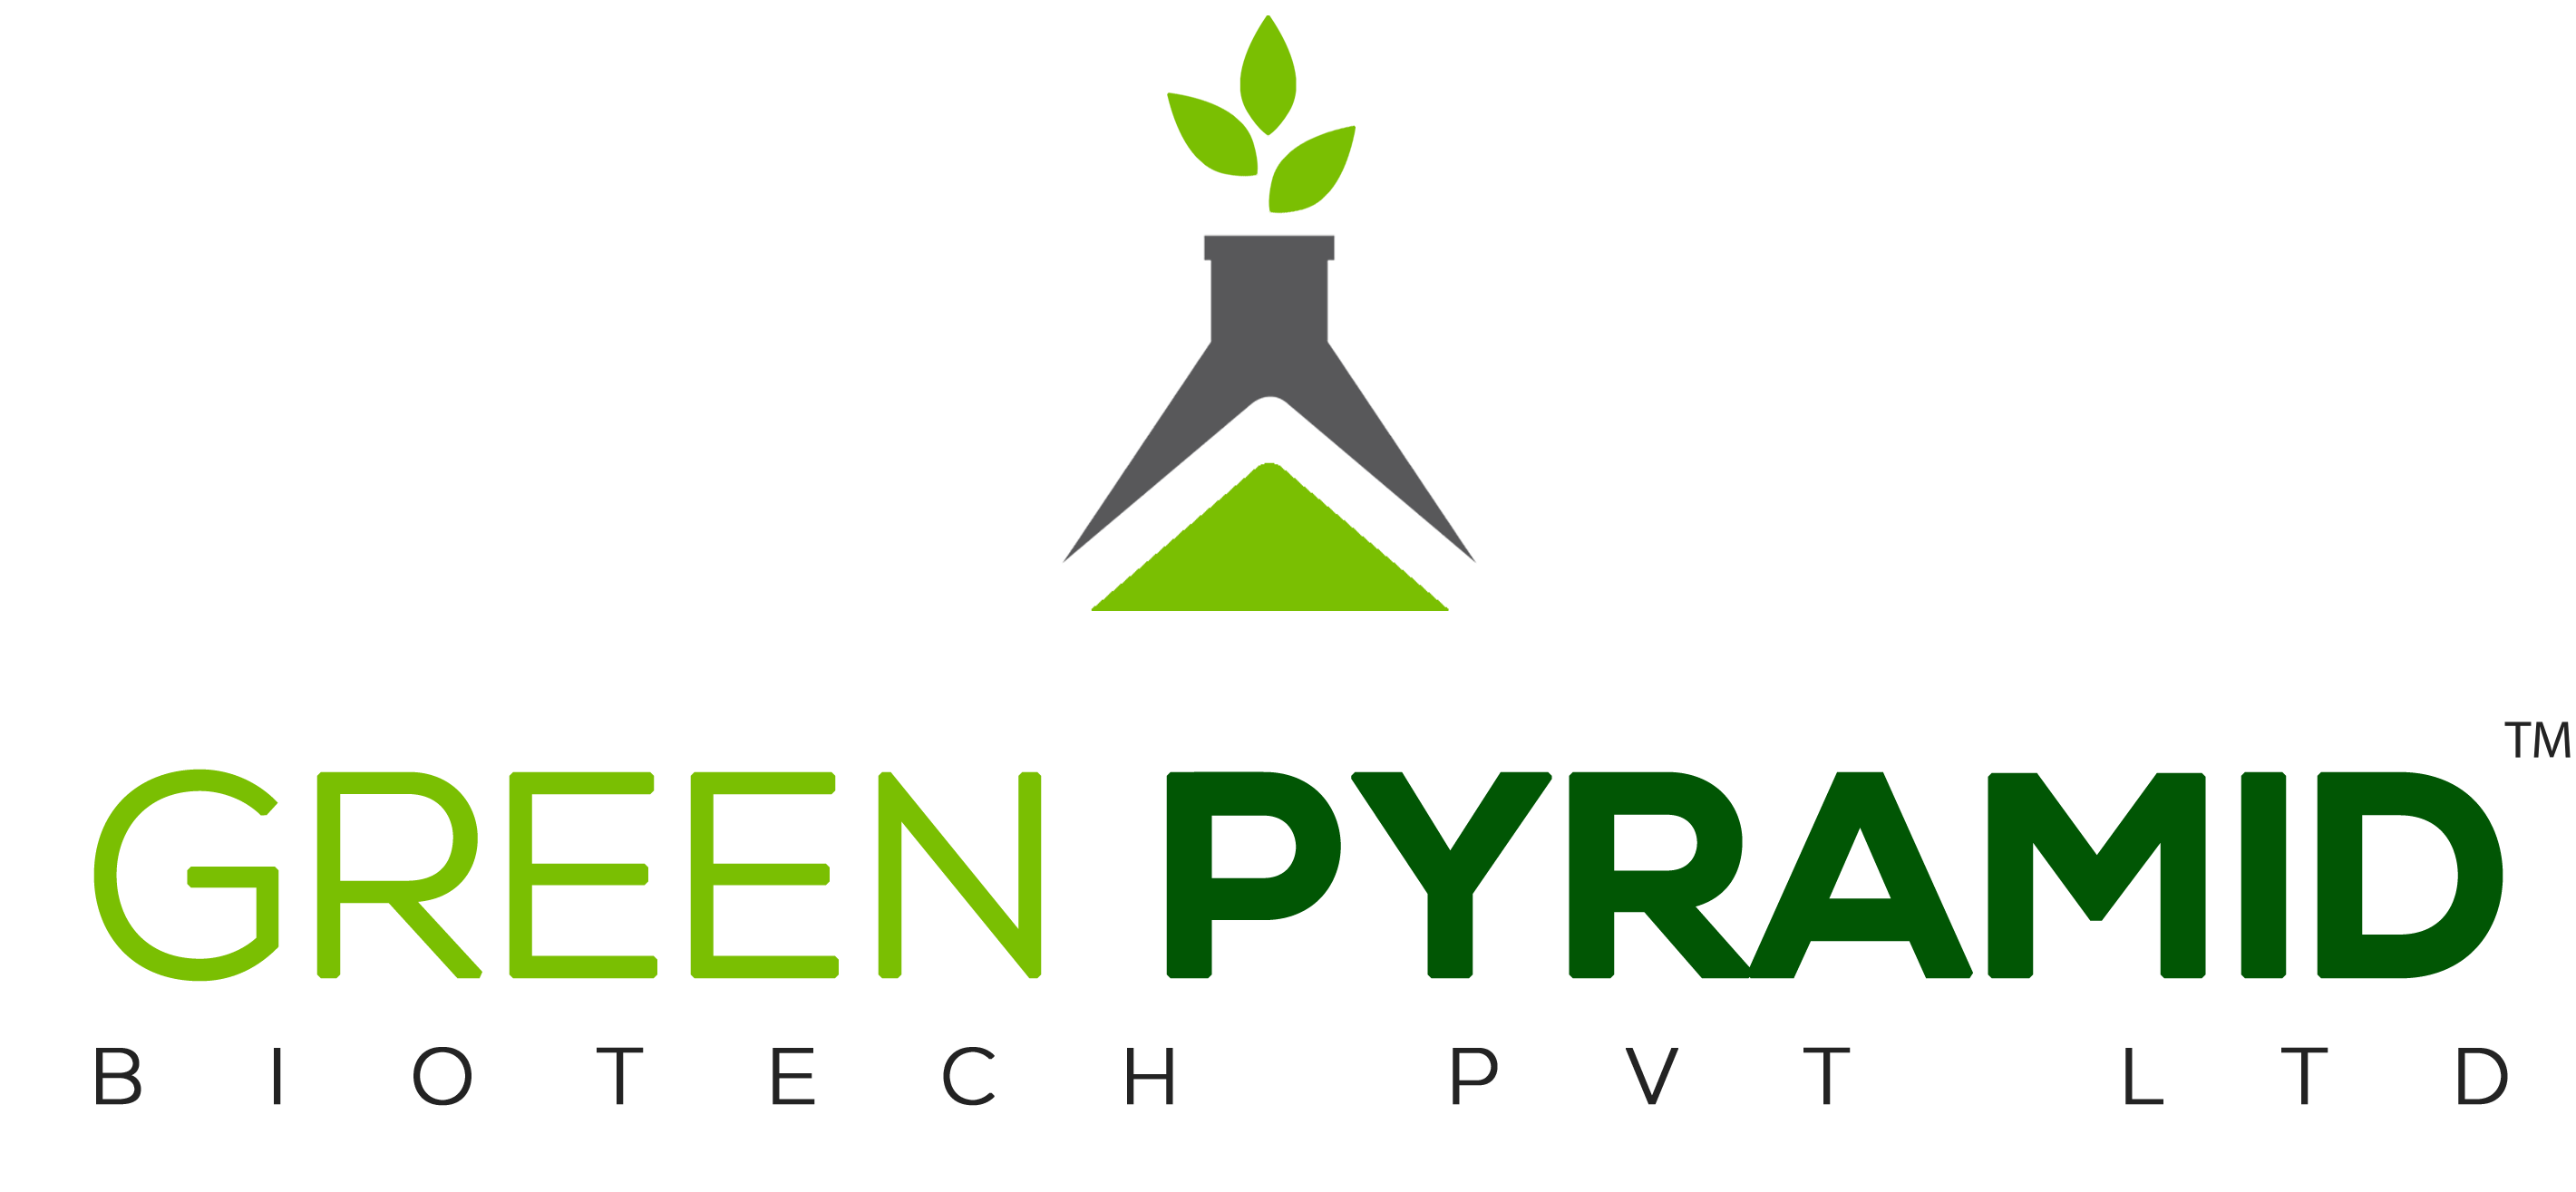 Green Pyramid Logo - Green Pyramid Biotech | Startups @ Venture Center